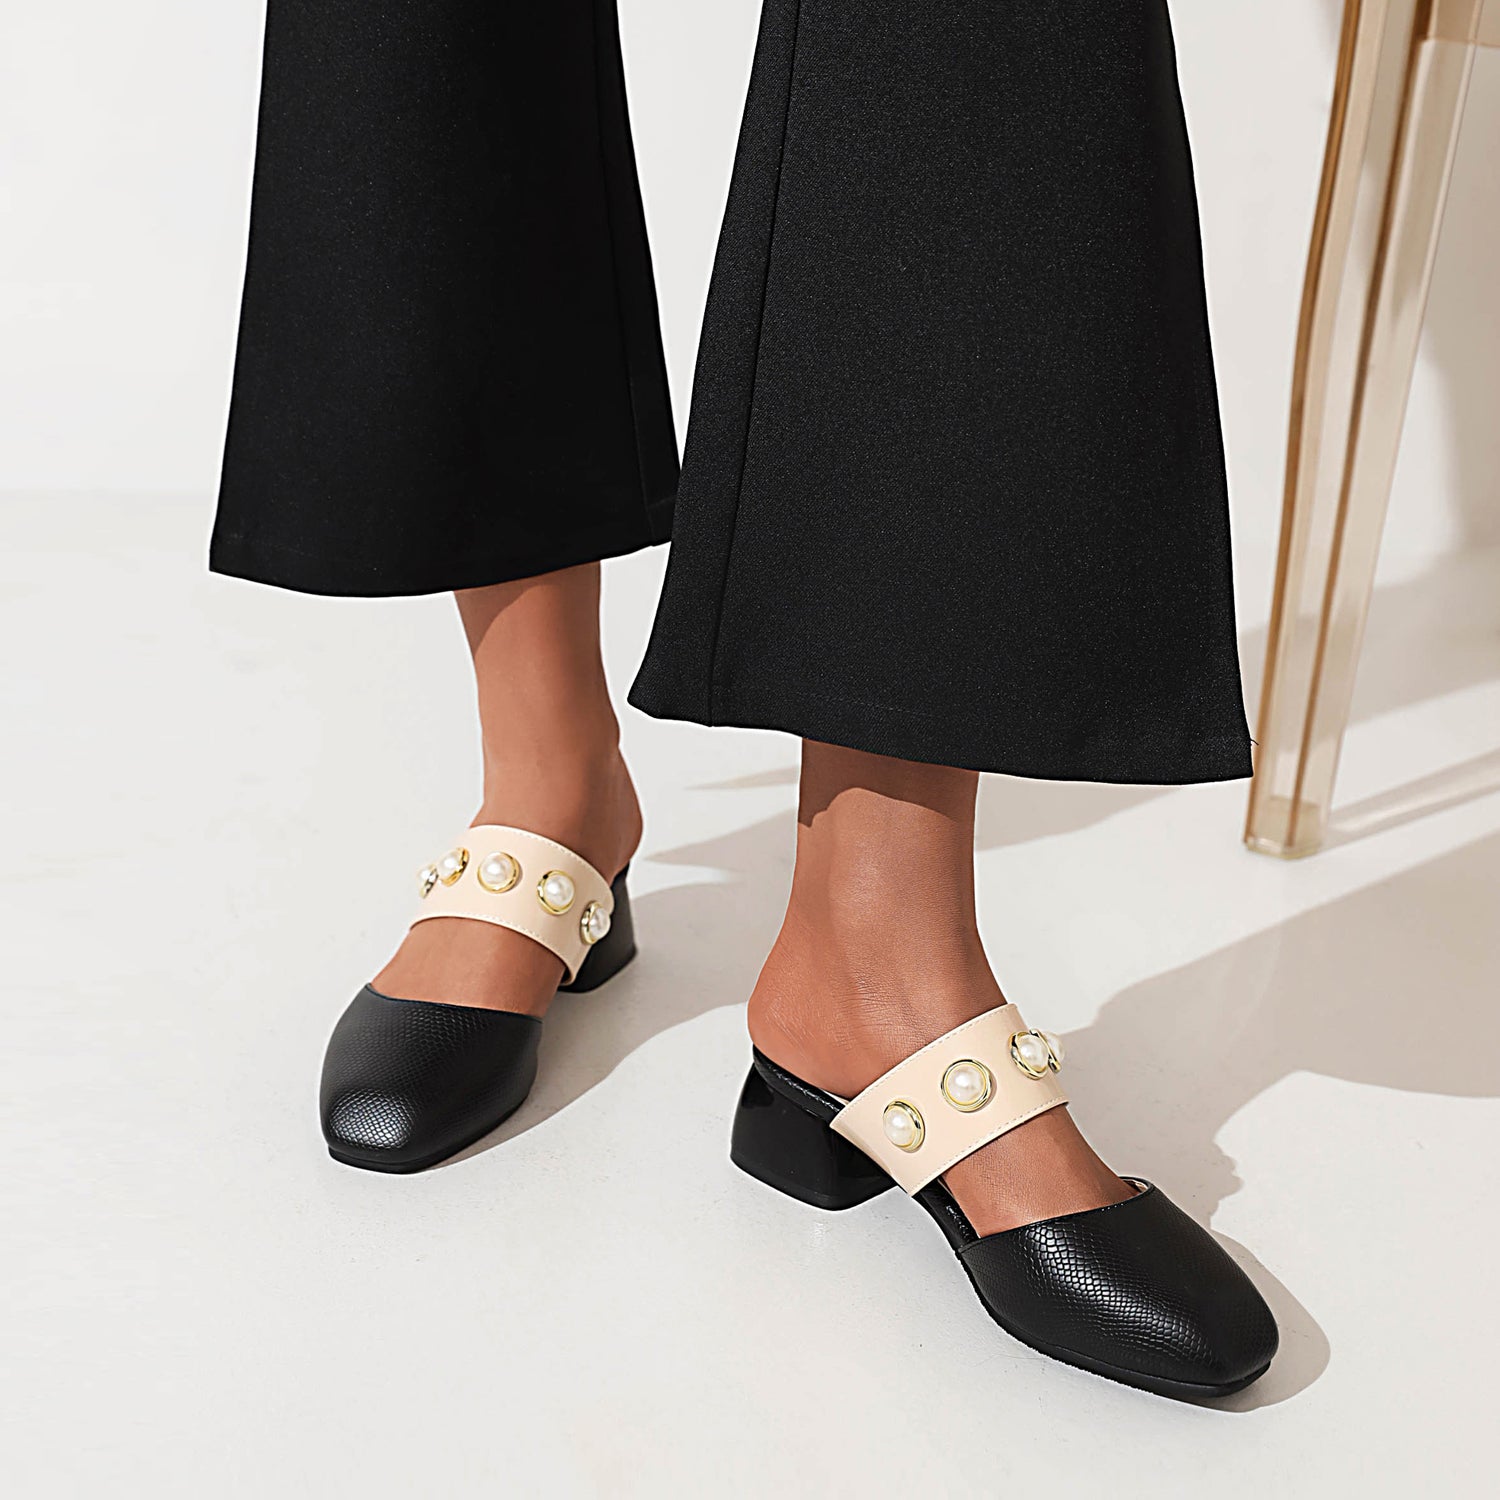 Bigsizeheels Houndstooth Pearl Round Toe Flats Sandals - Black best oversized womens heels are from bigsizeheels®